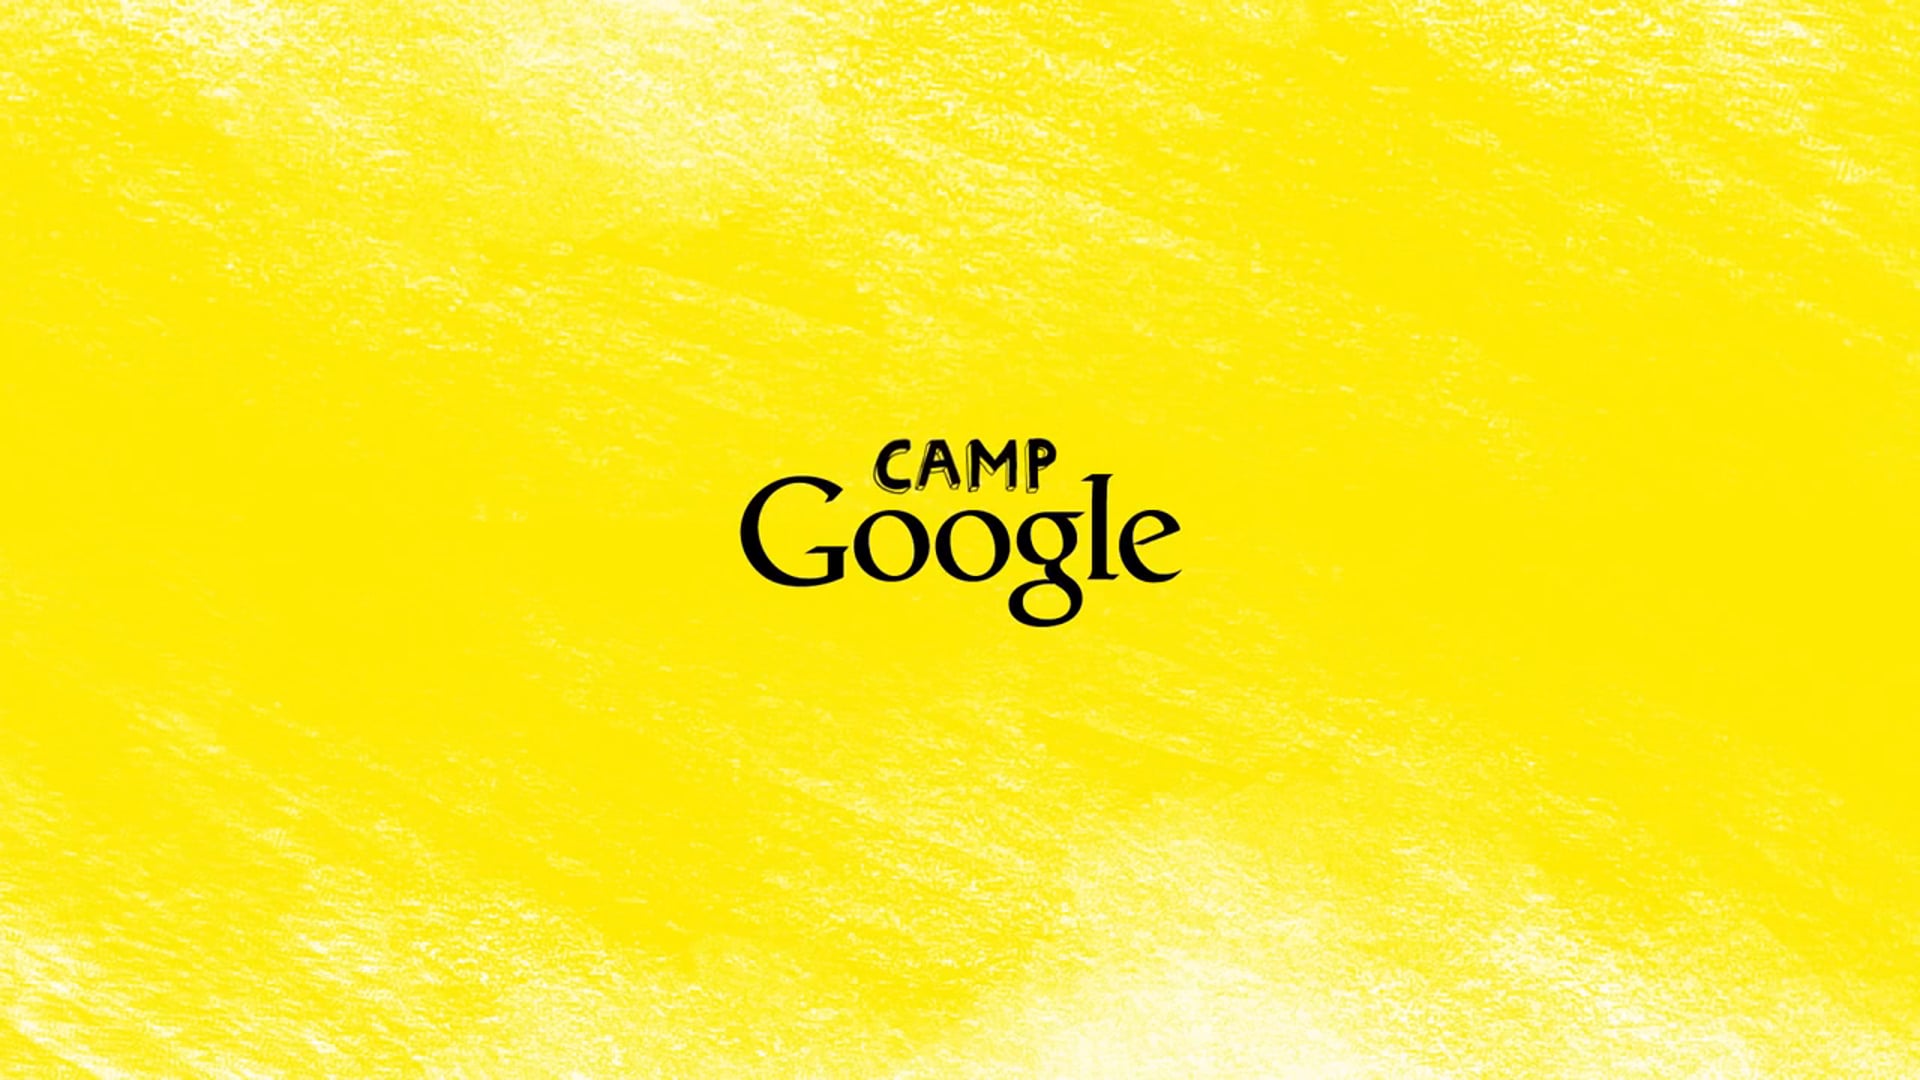 Commercial Color Grading Camp Google - Let's Find Out